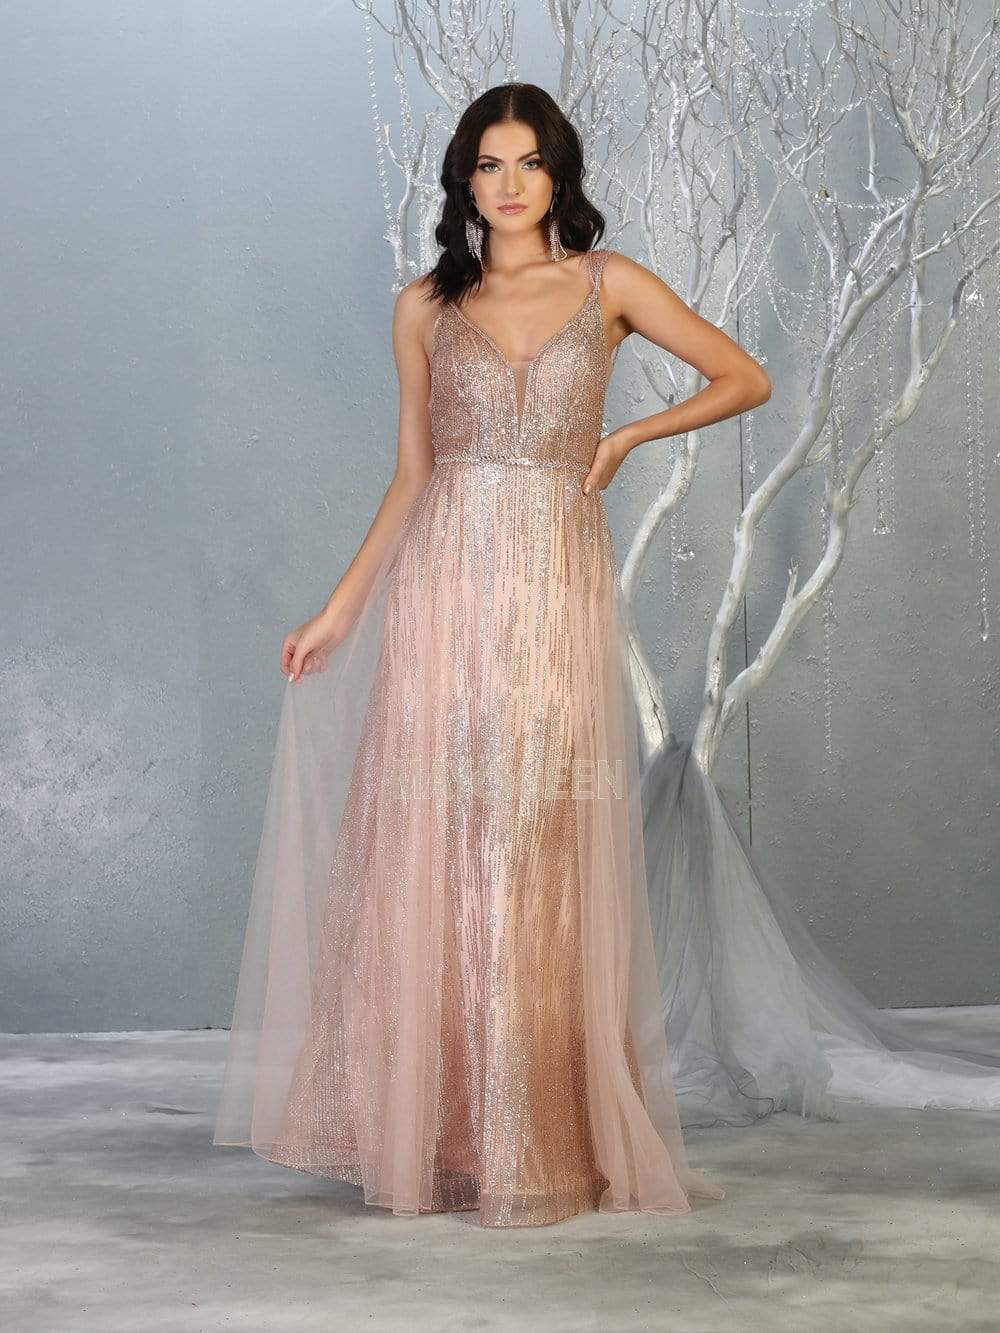 May Queen - MQ1735 Embellished Deep V-neck A-line Dress Prom Dresses 4 / Rosegold